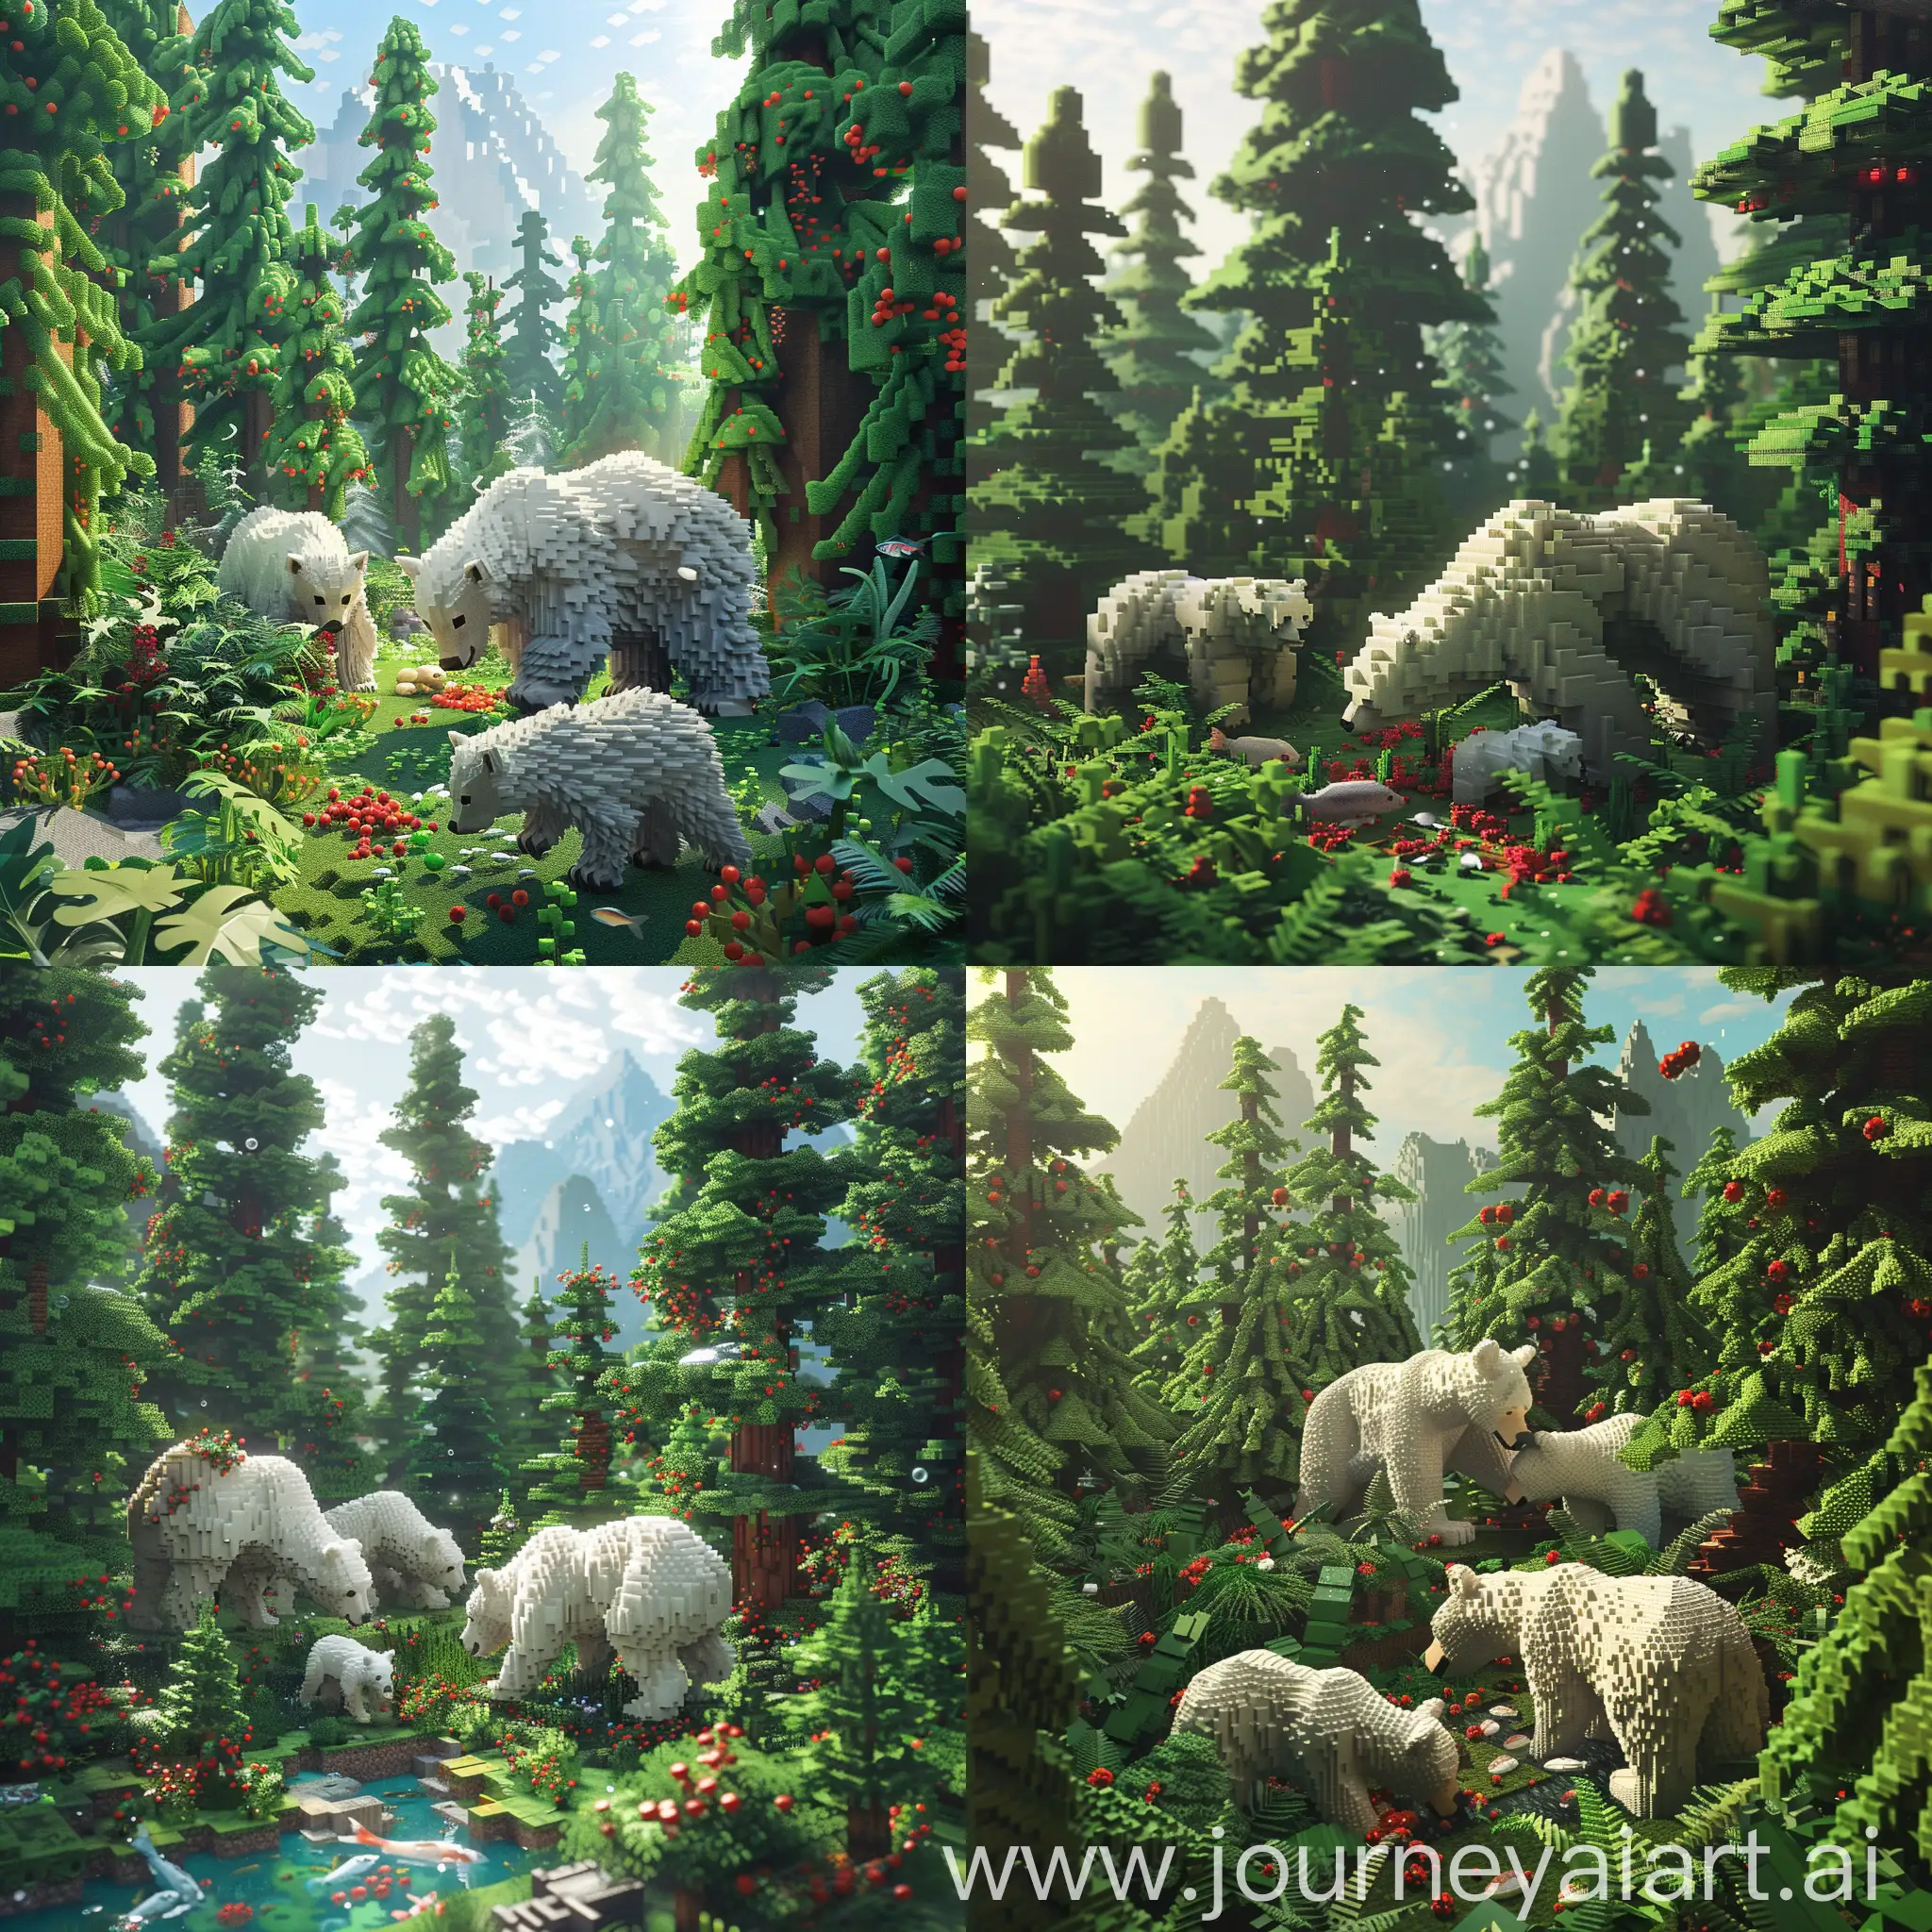 Tranquil-Forest-Scene-Family-of-White-Bears-Foraging-in-Minecraft-Habitat